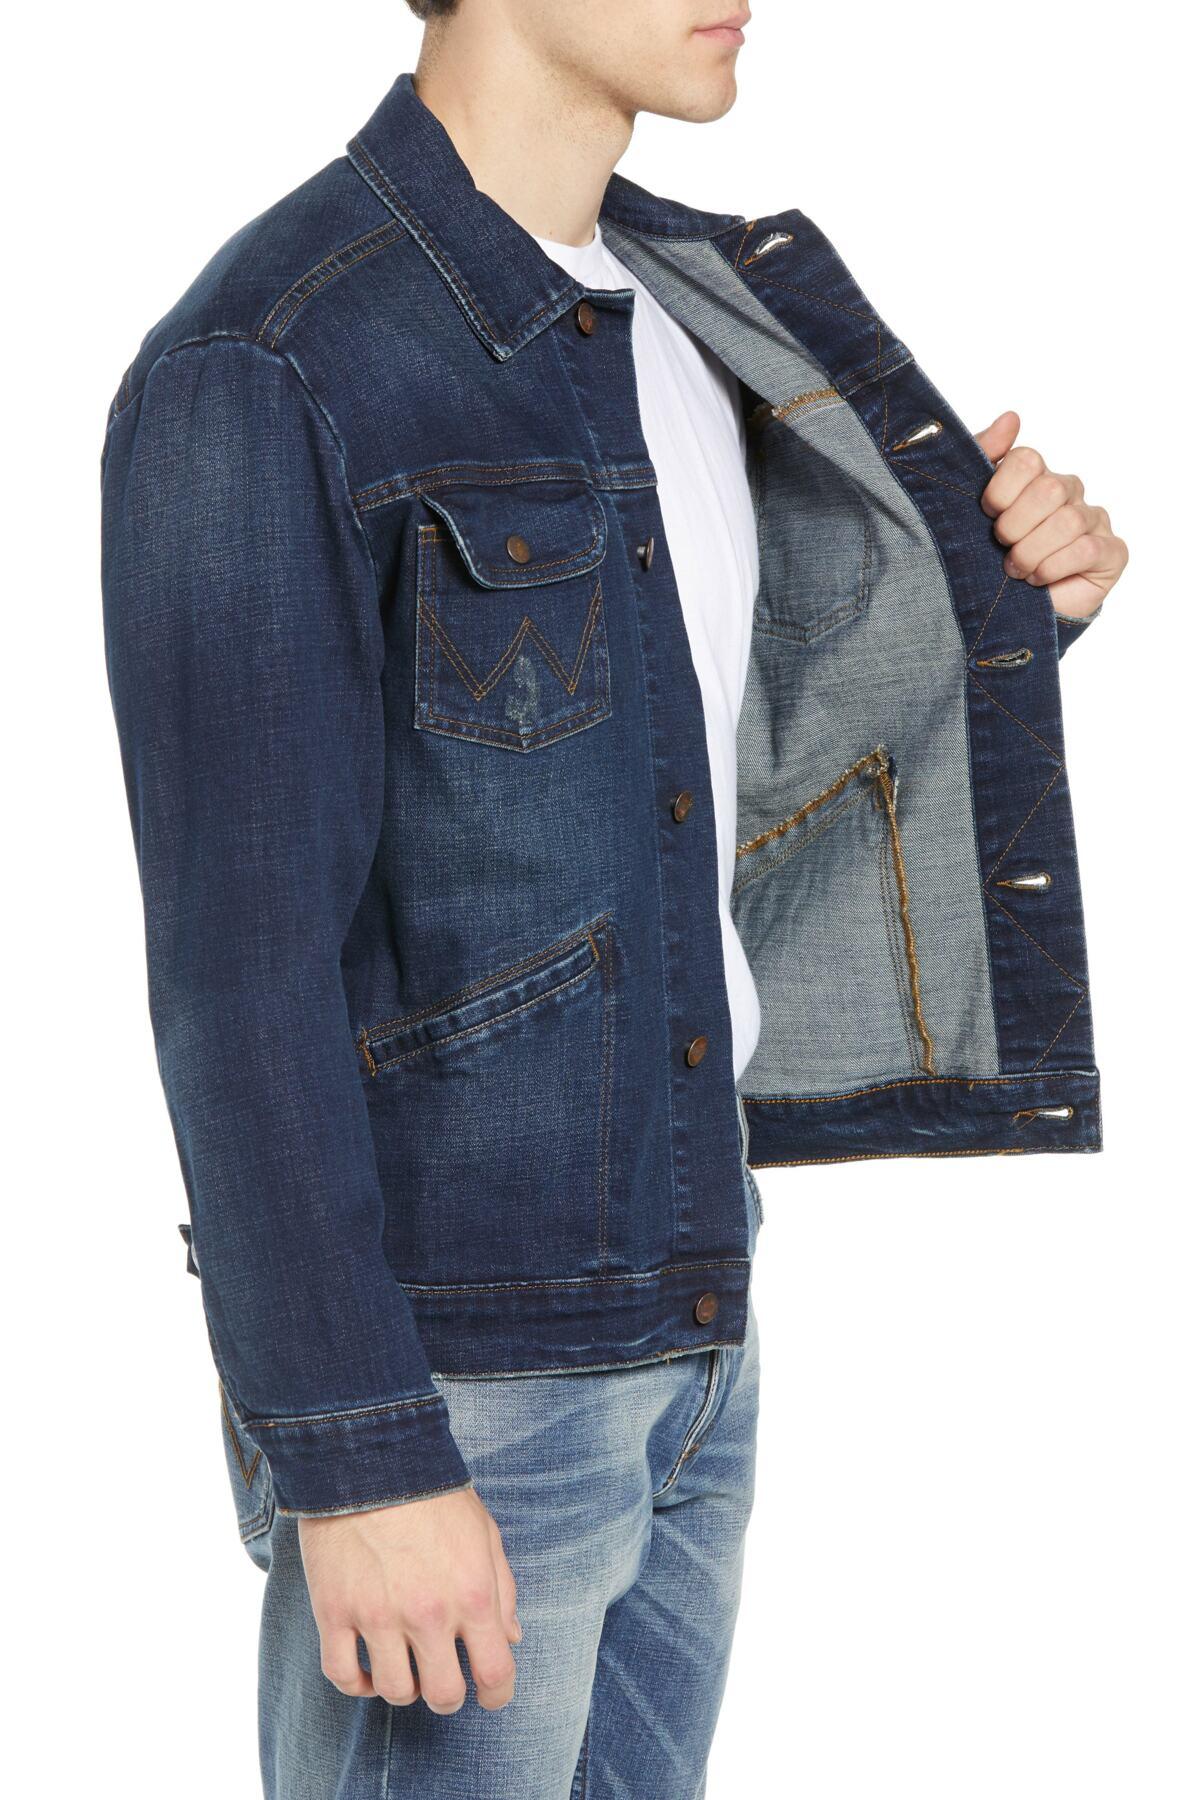 Wrangler Heritage Denim Jacket in Dark Wash (Blue) for Men - Lyst